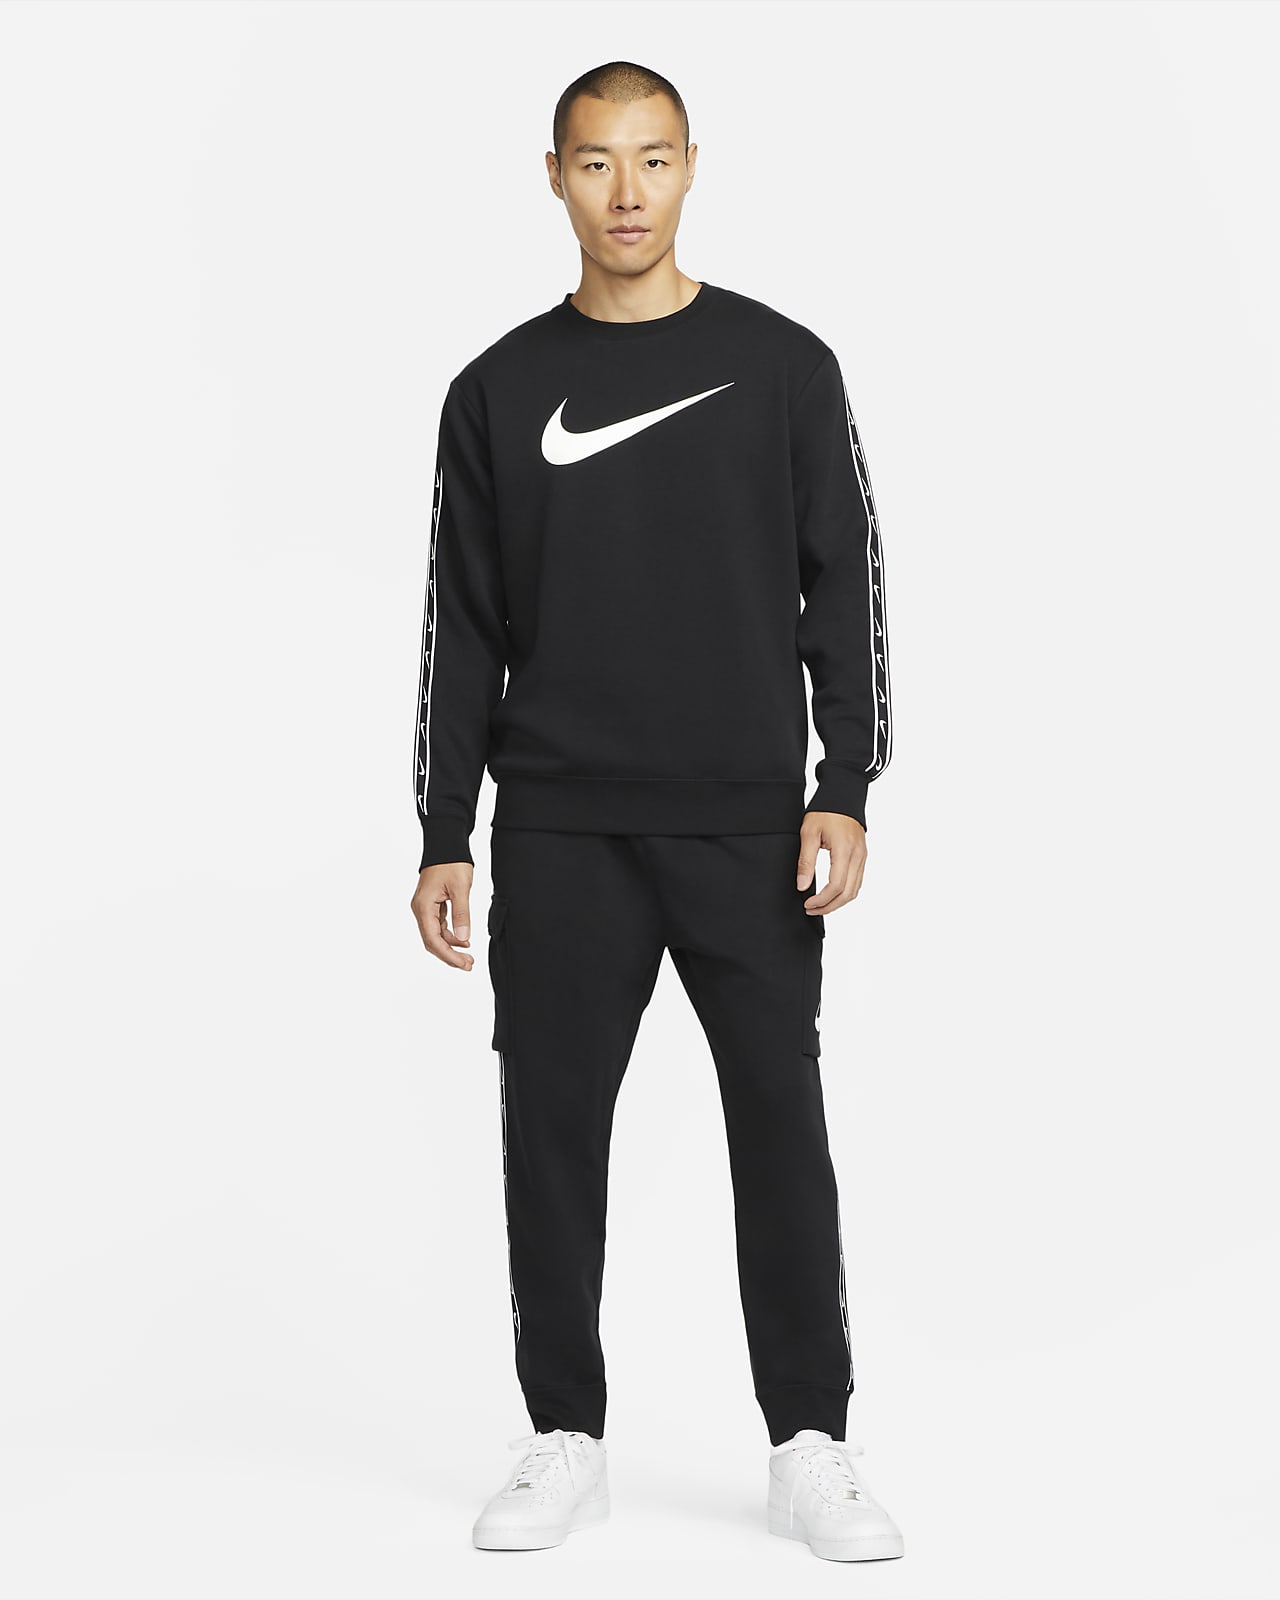 Nike Sportswear REPEAT - Short - black/white/noir 